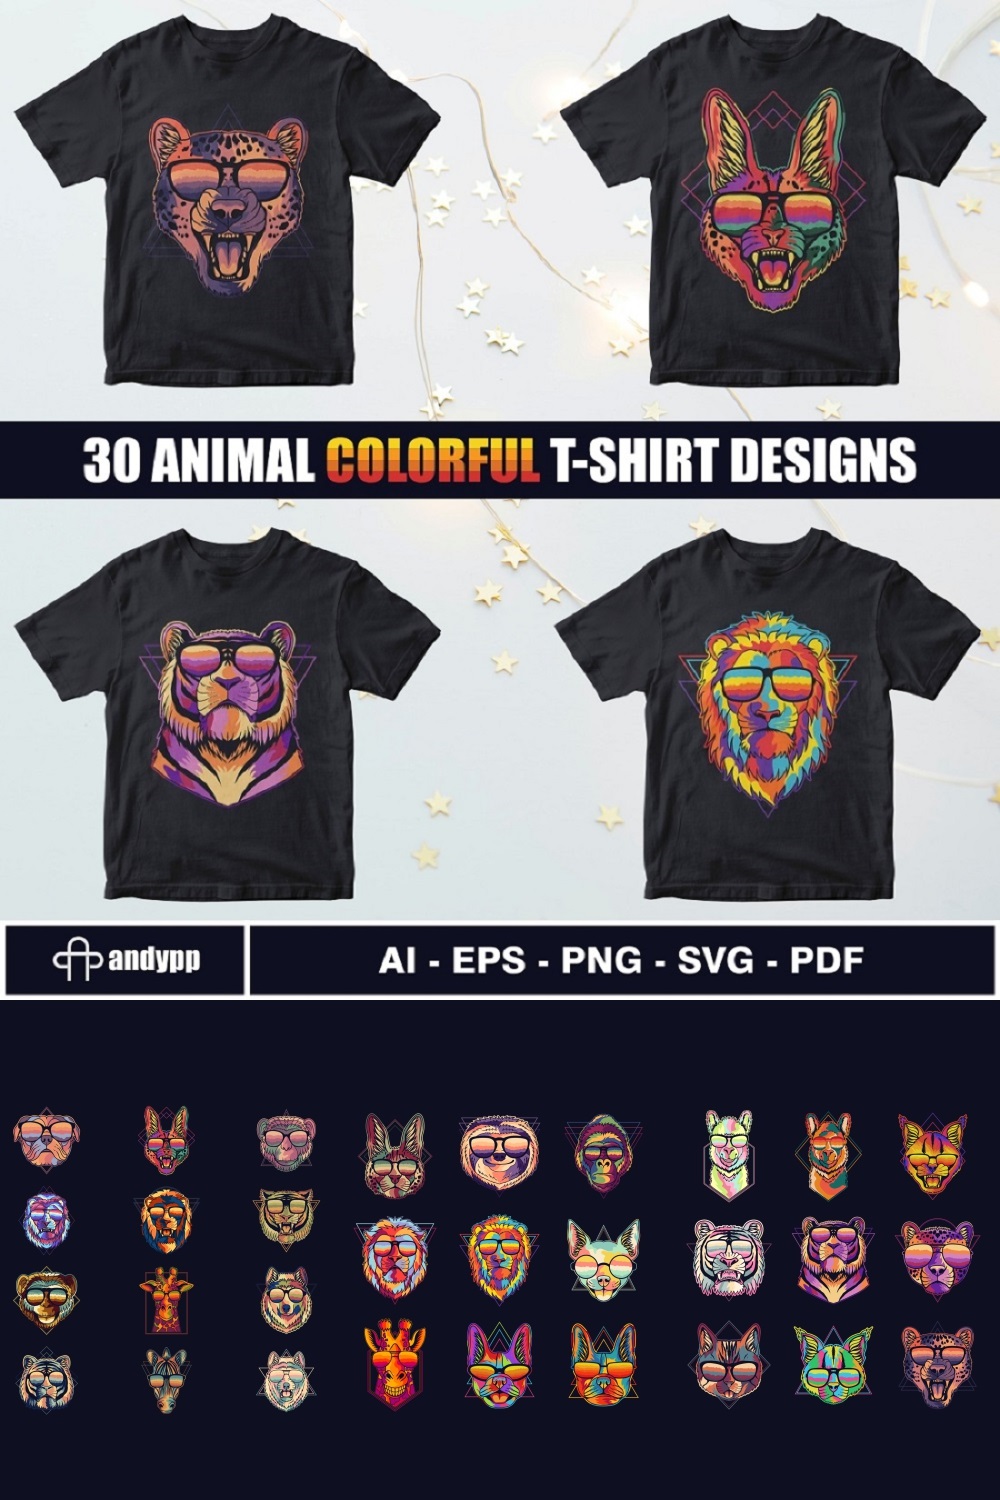 30 Animals Colorful Retro T-shirt Designs Pinterest Image.